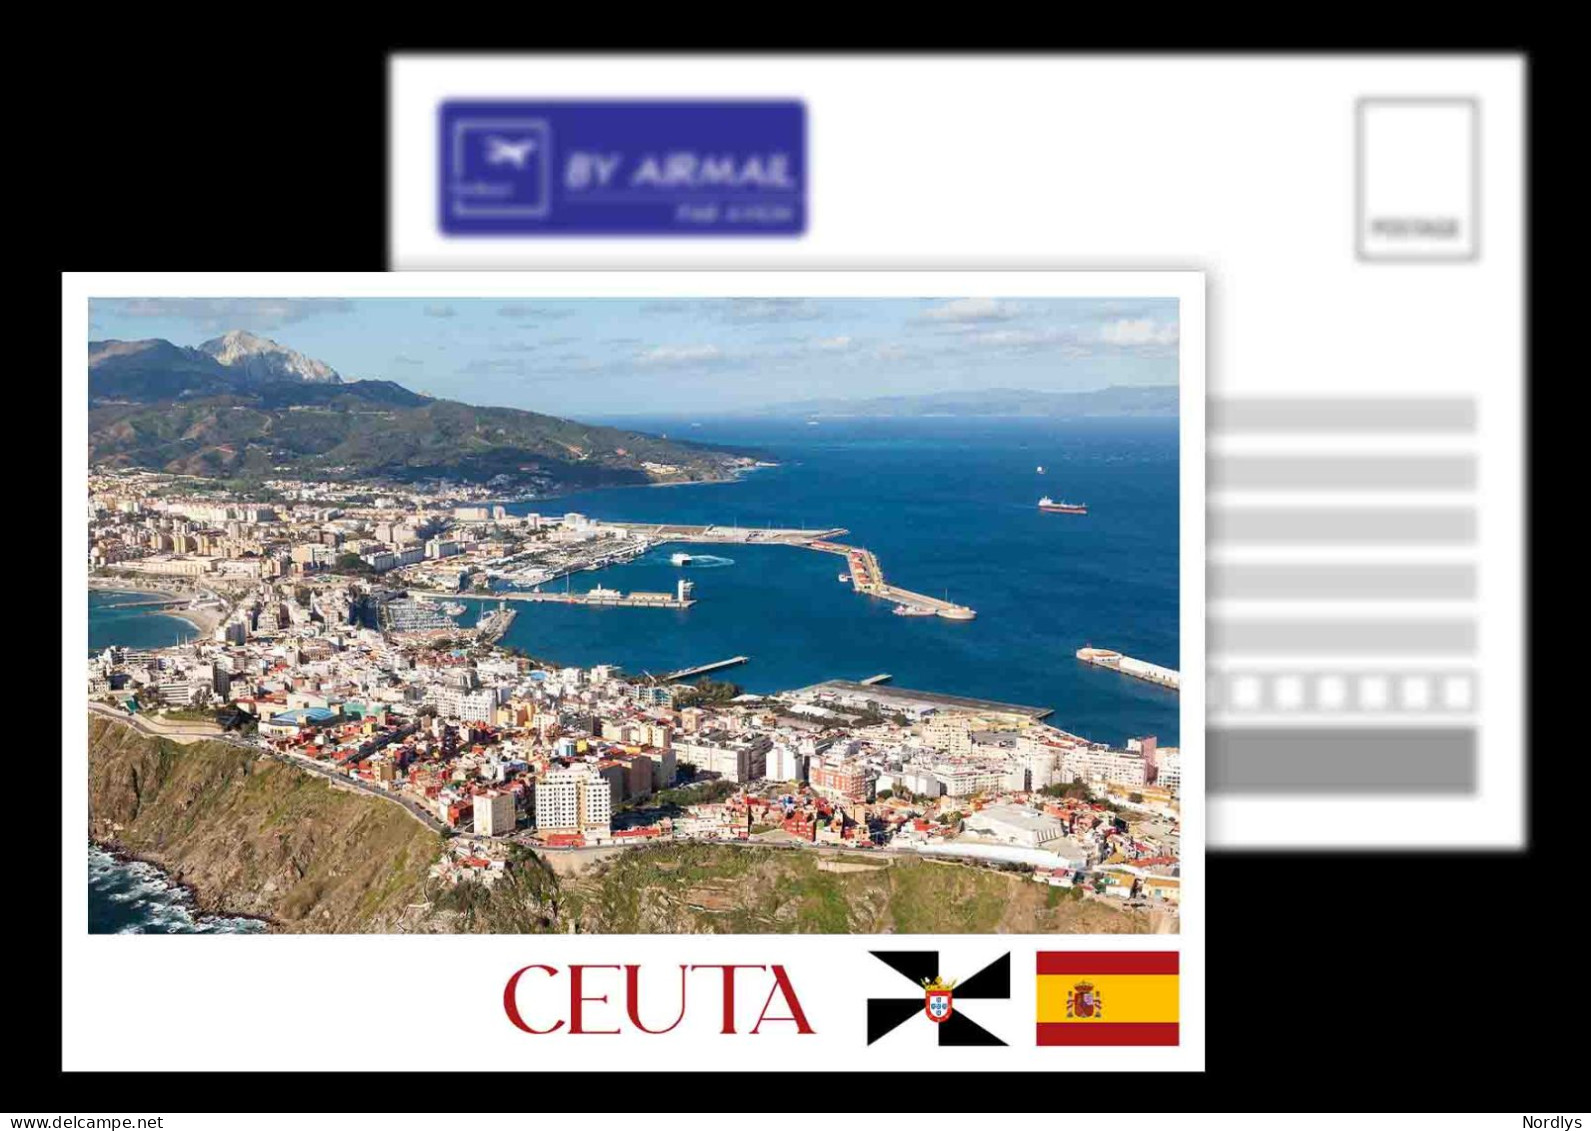 Ceuta / Spain / Postcard / View Card - Ceuta